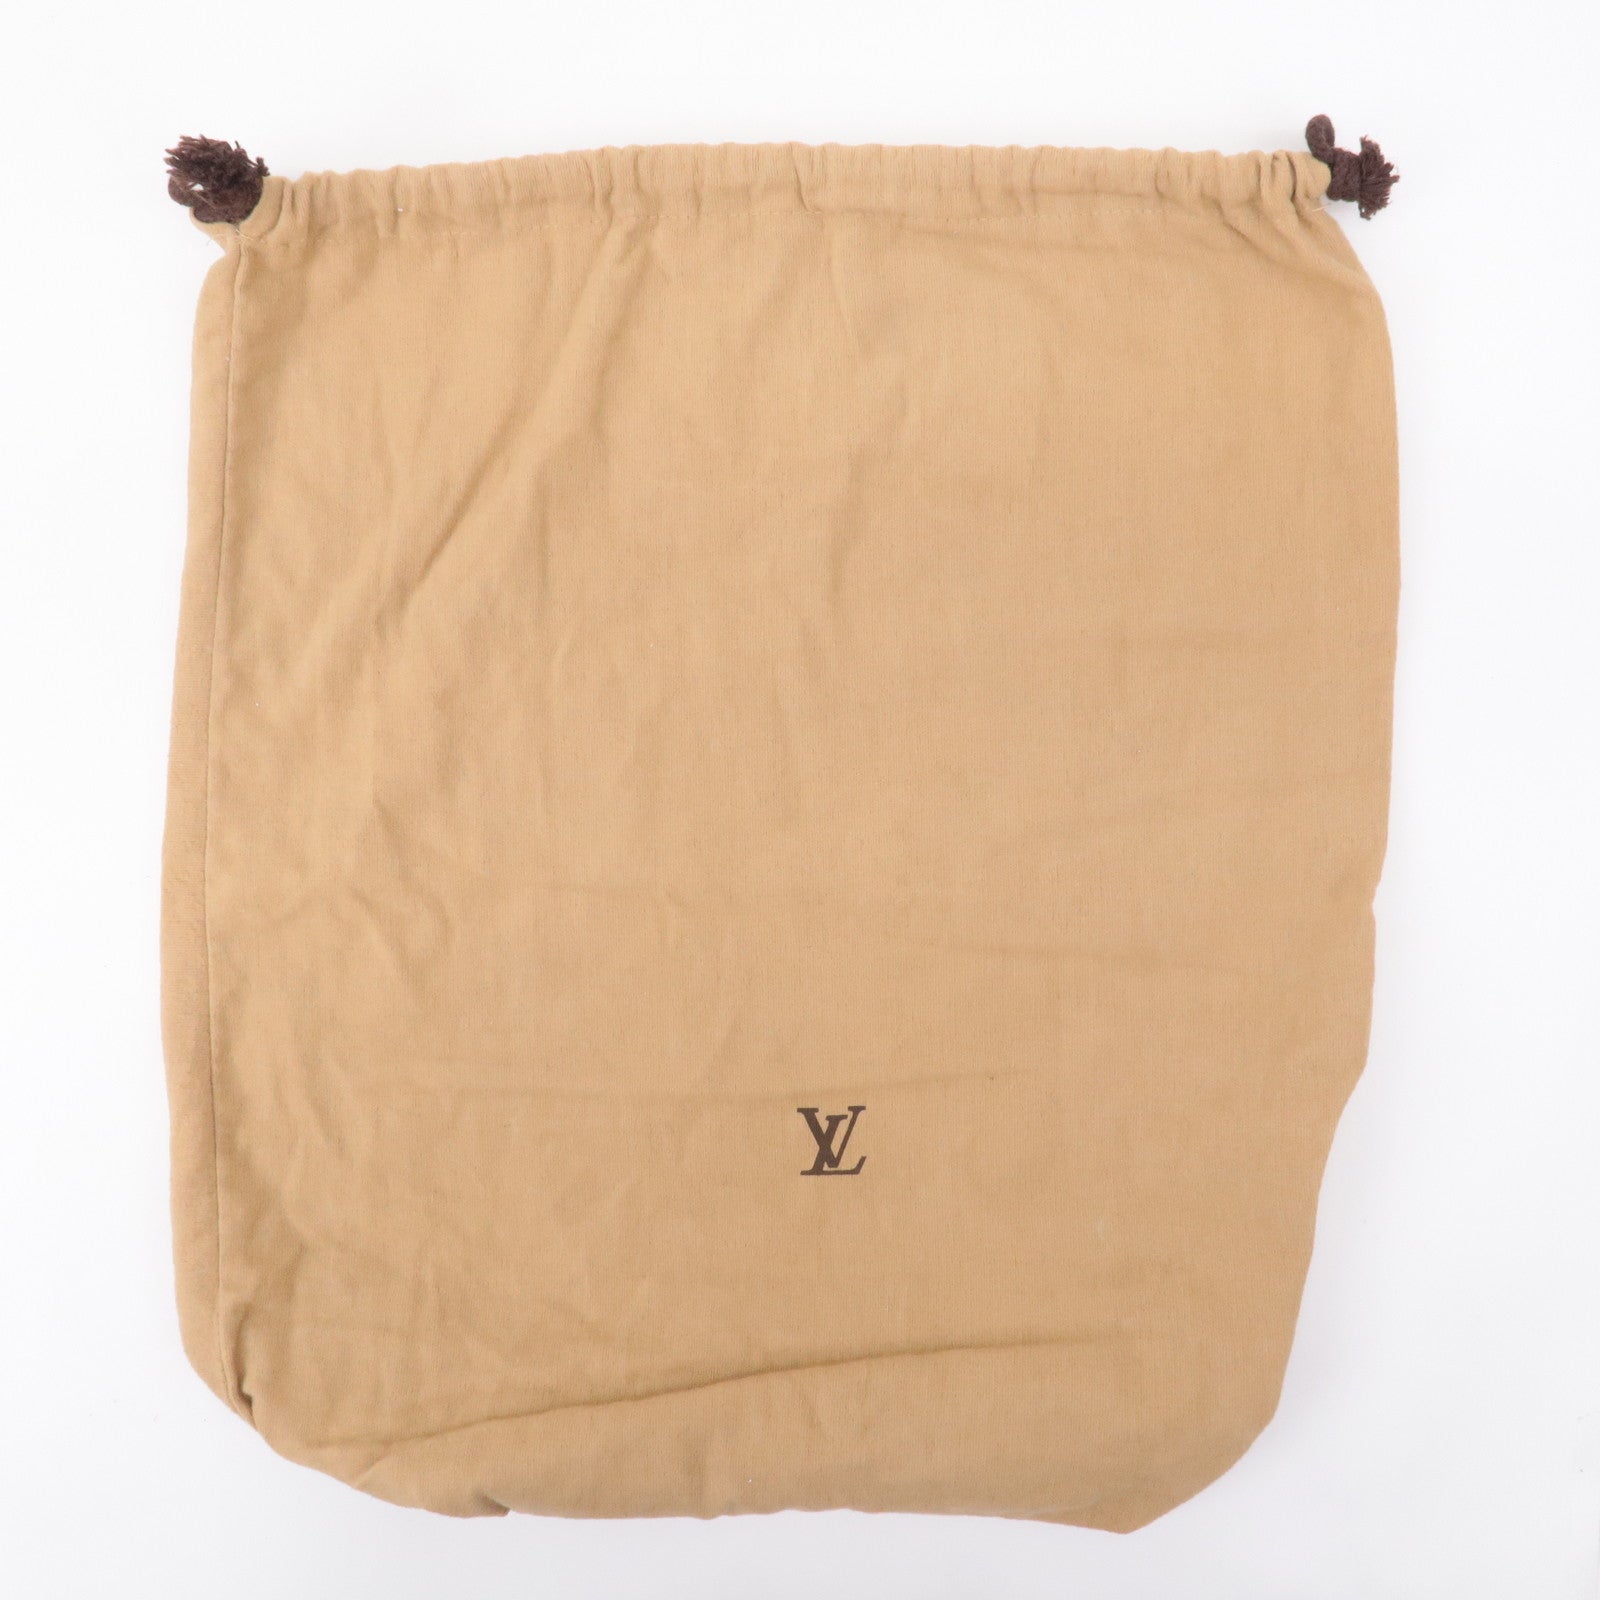 Louis Vuitton Louis Vuitton Dust bag for Large Bags--String type